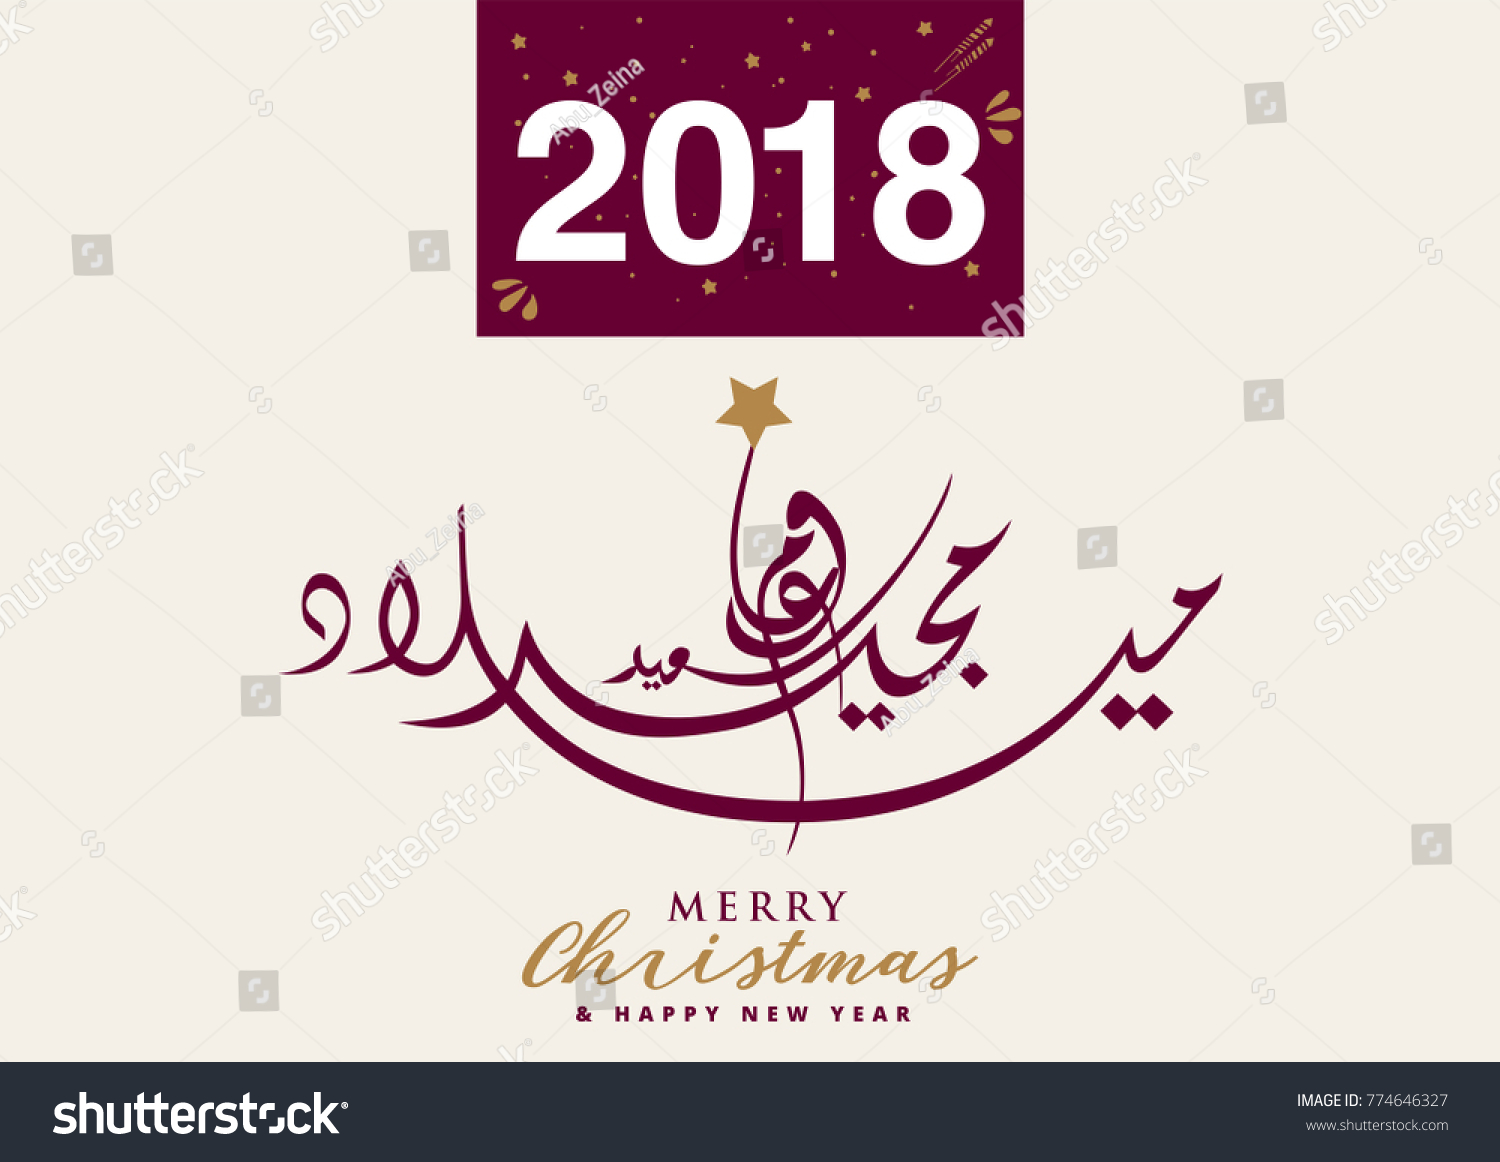 Merry Christmas Happy 2018 New Year Stock Vector 774646327 - Shutterstock